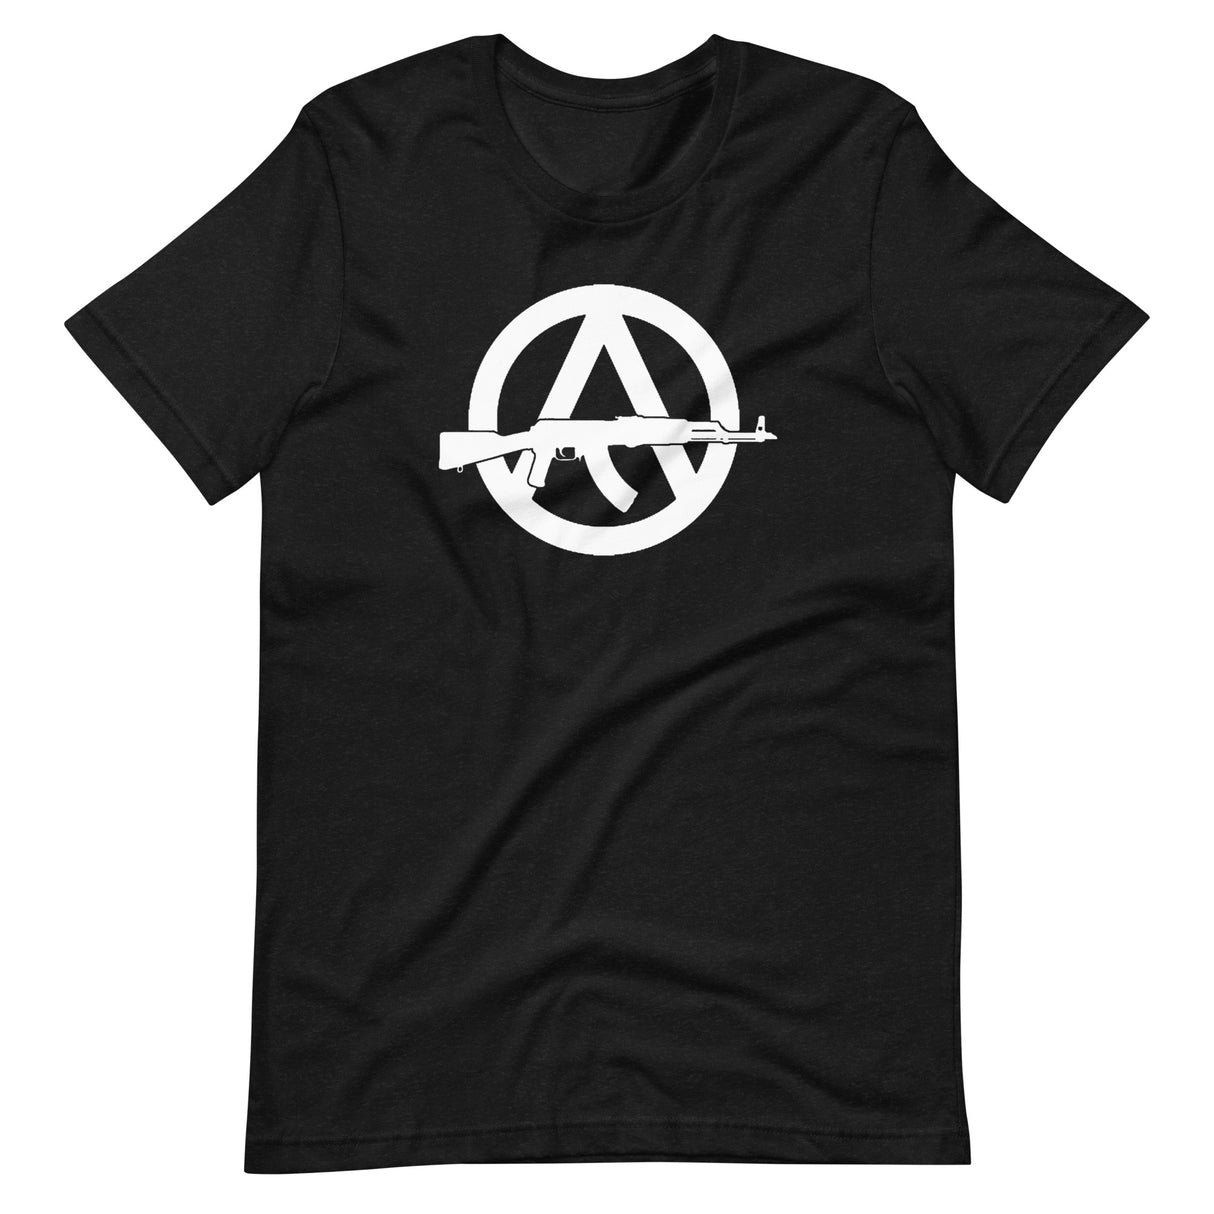 Anarchy AK 47 Shirt by Libertarian Country